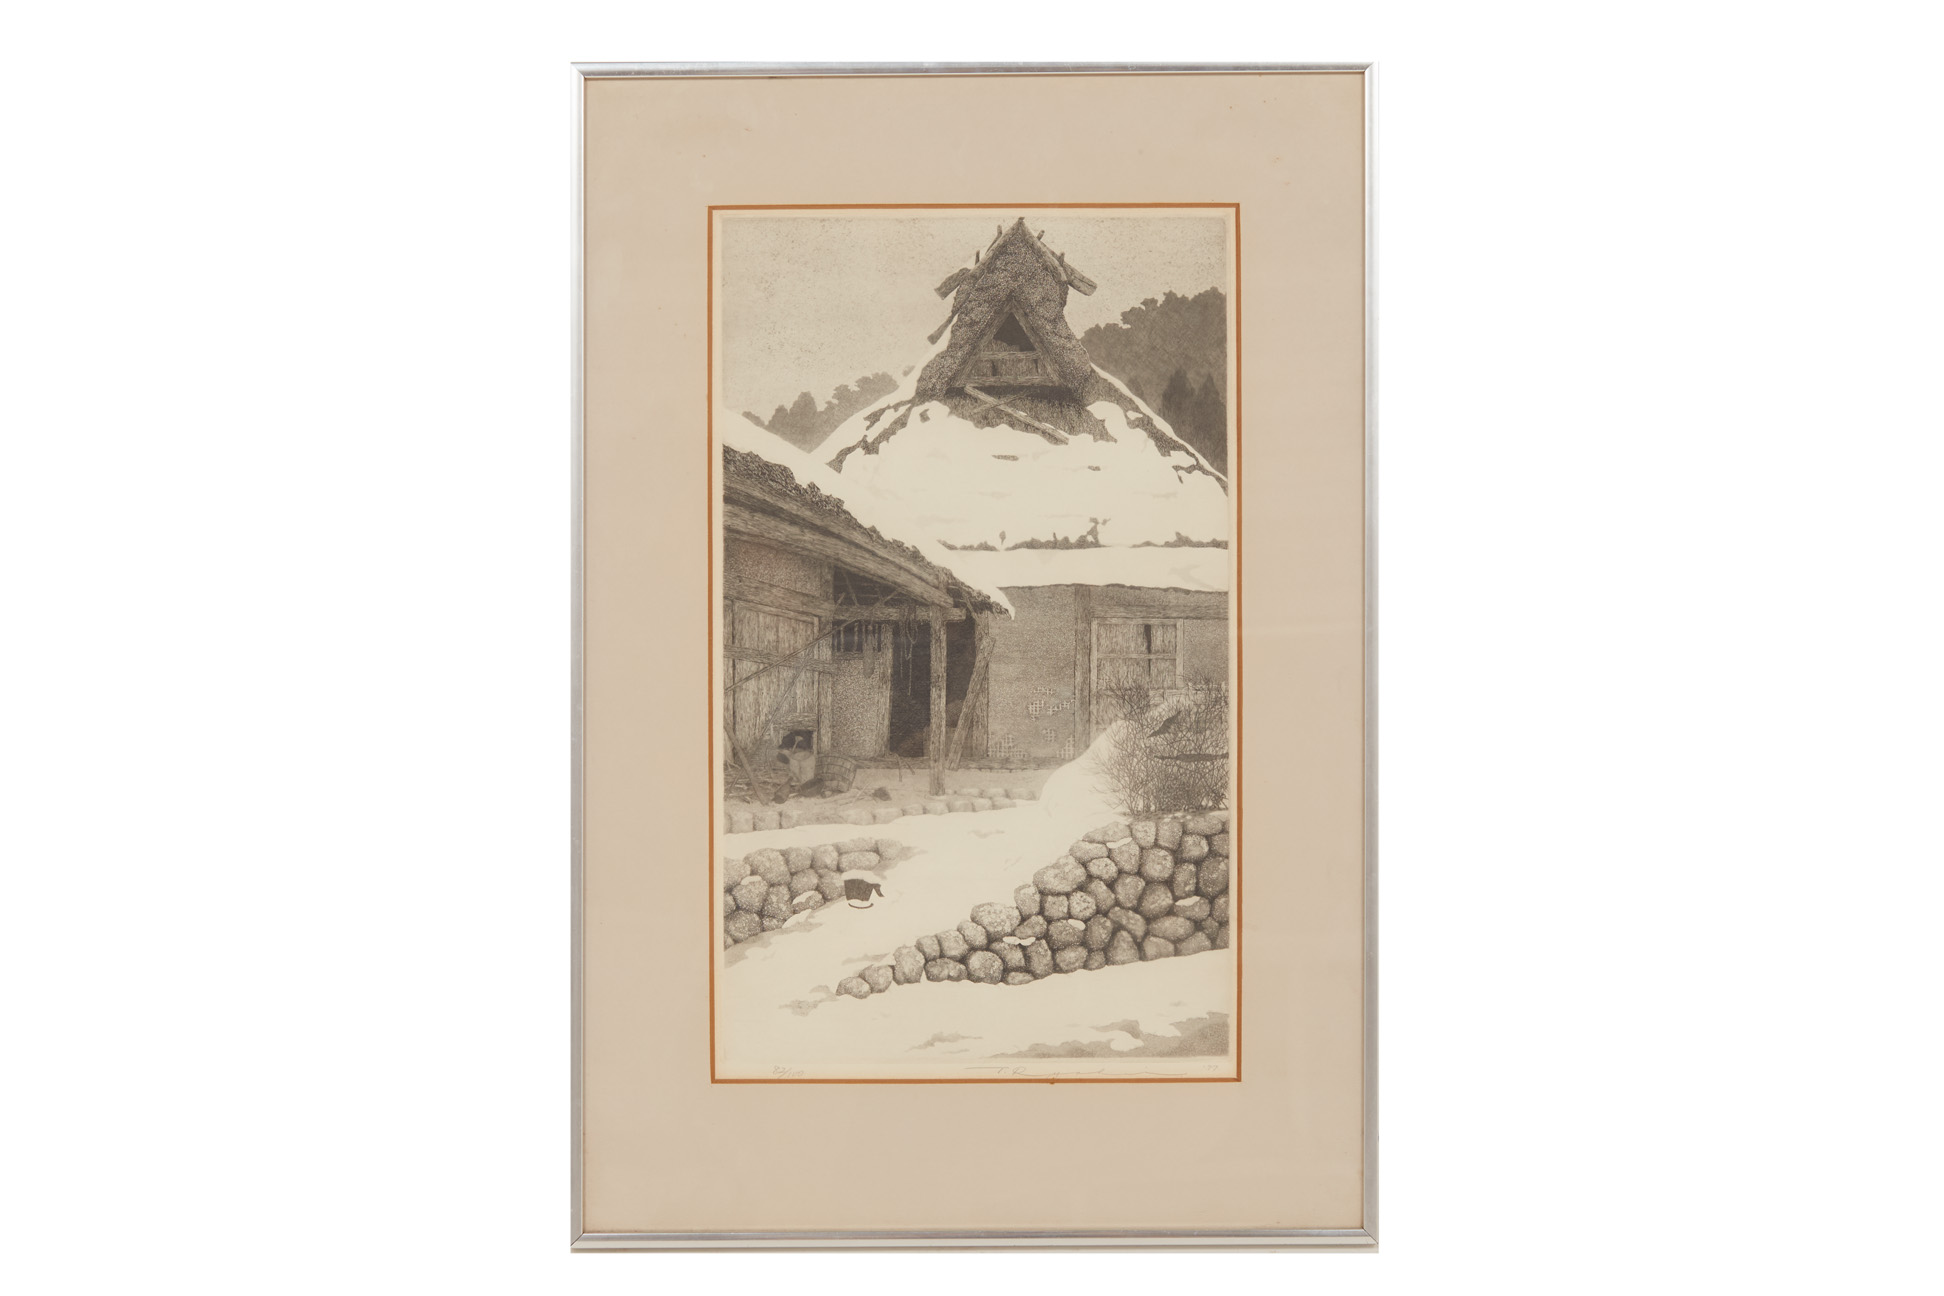 TANAKA RYOHEI (JAPANESE 1933-2019) - LINGERING SNOW - Image 2 of 2